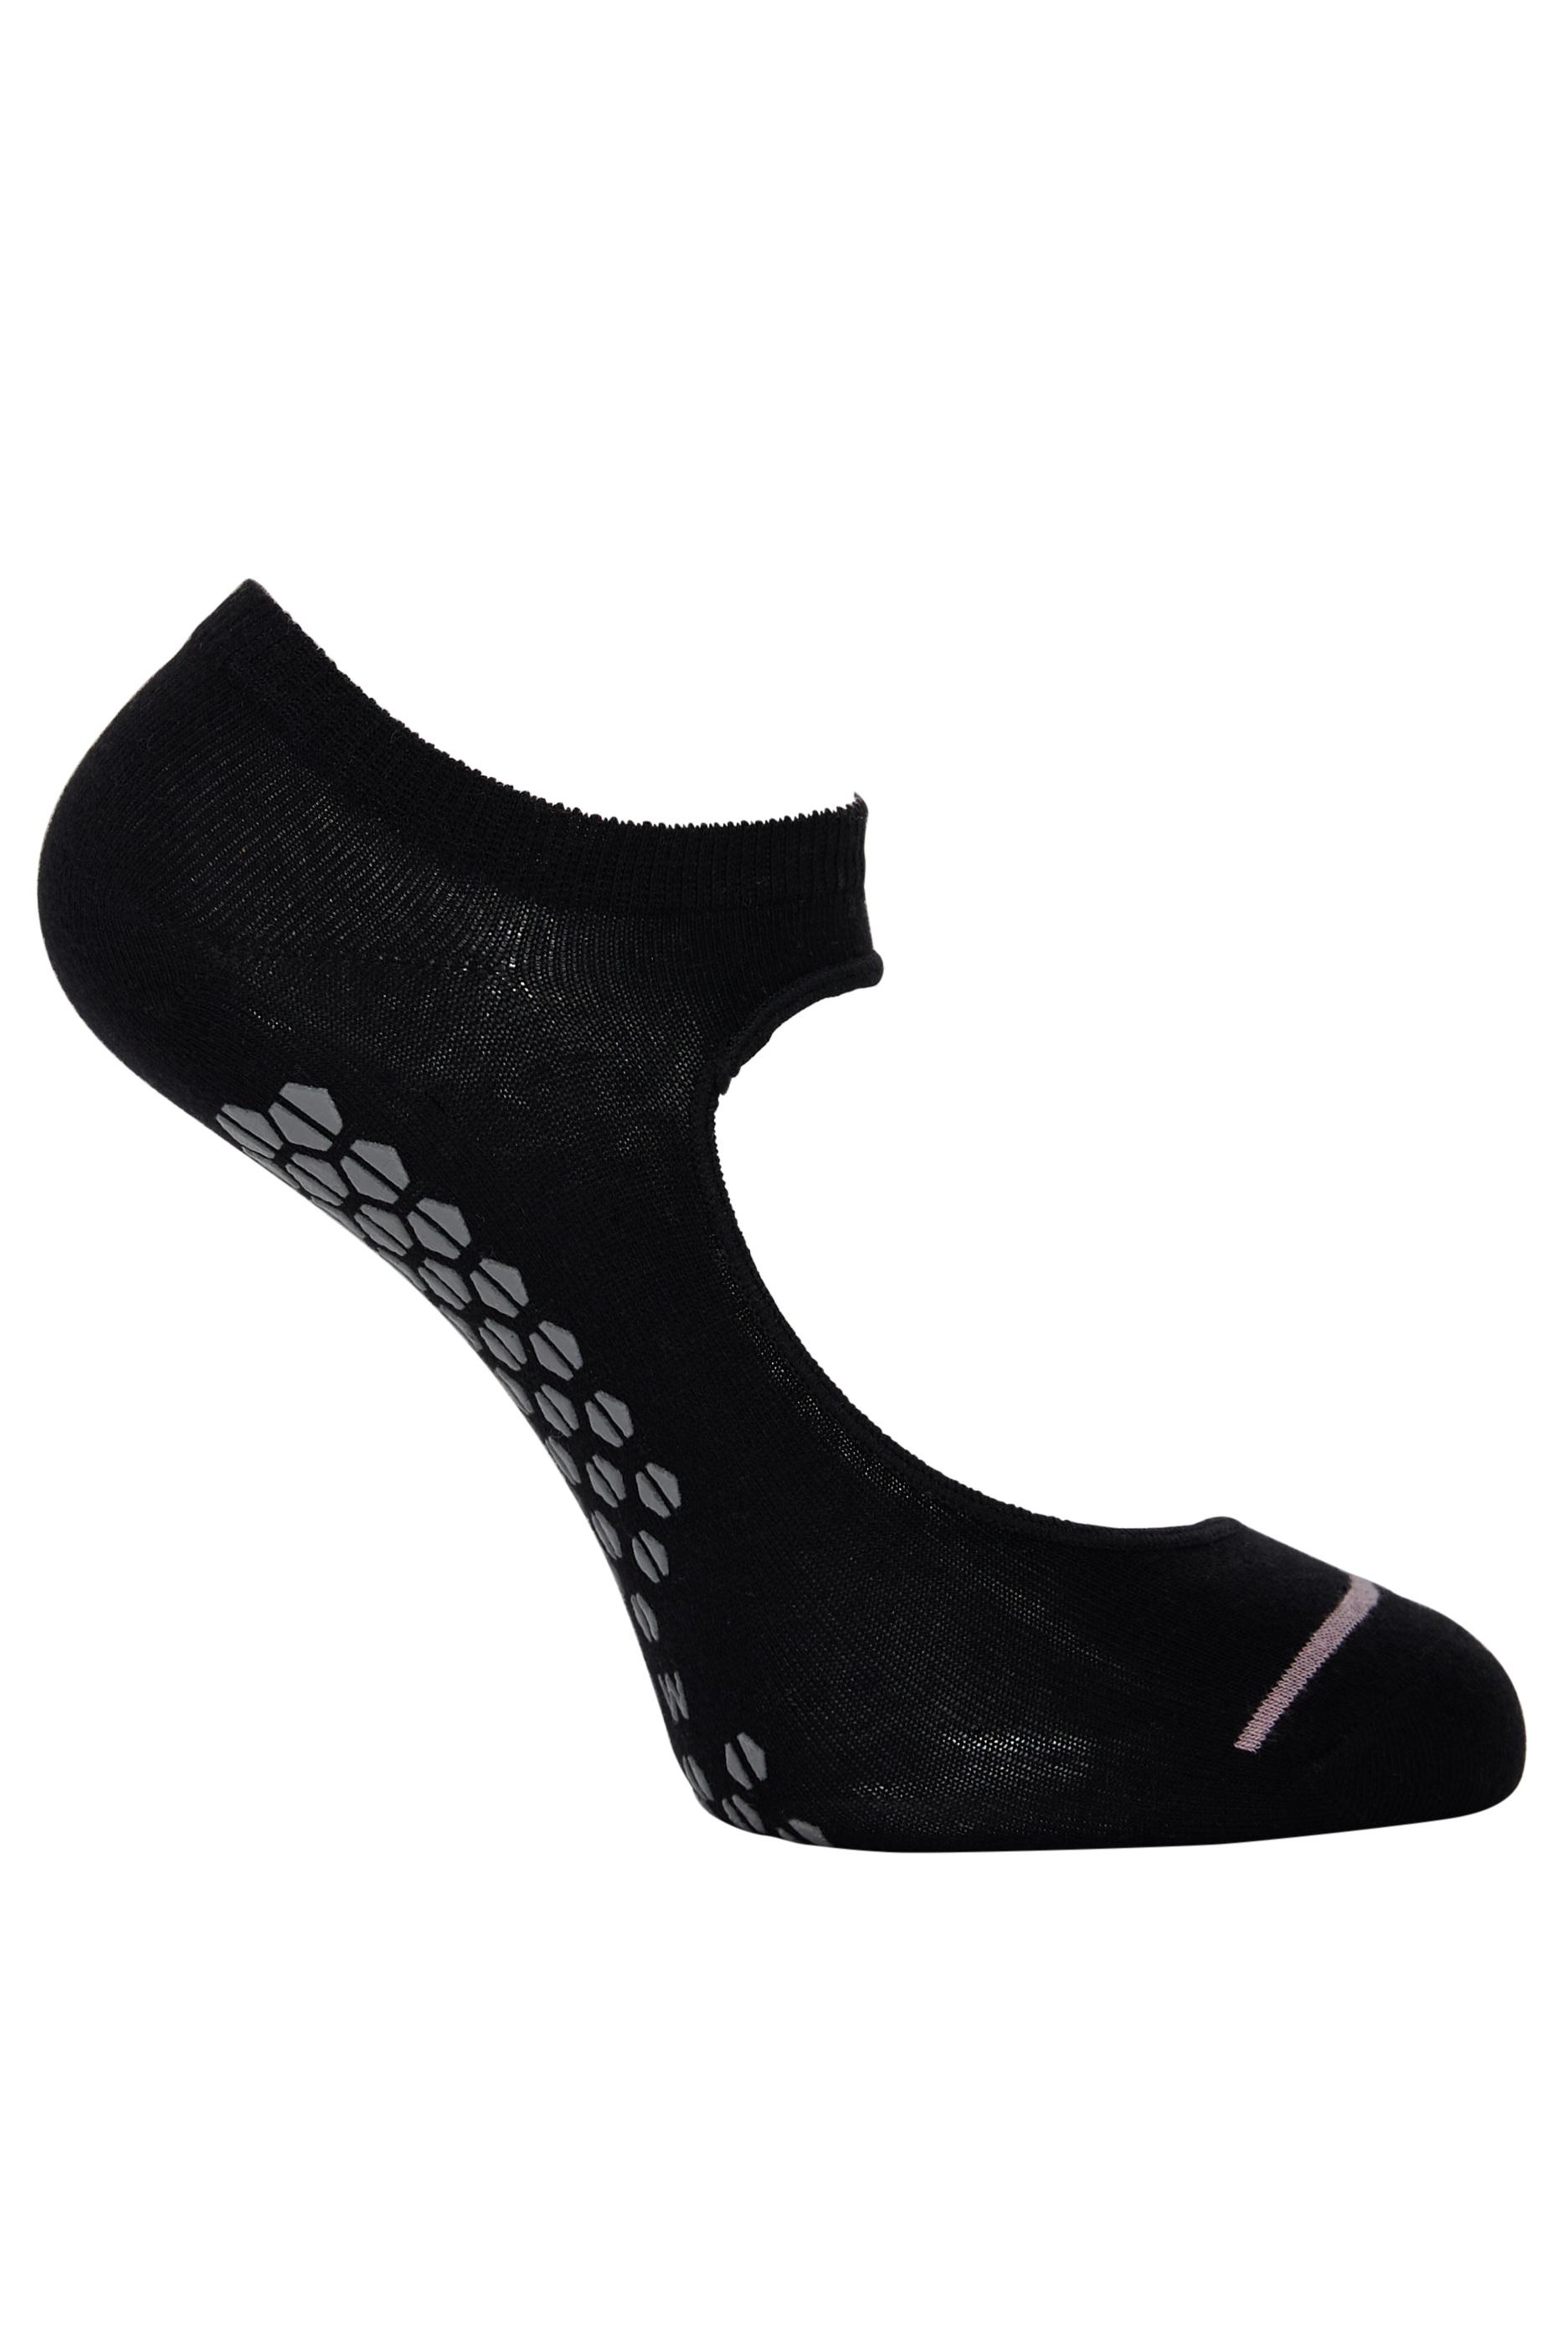 Side of Simon de Winter Women's Cotton Yoga Socks in Black